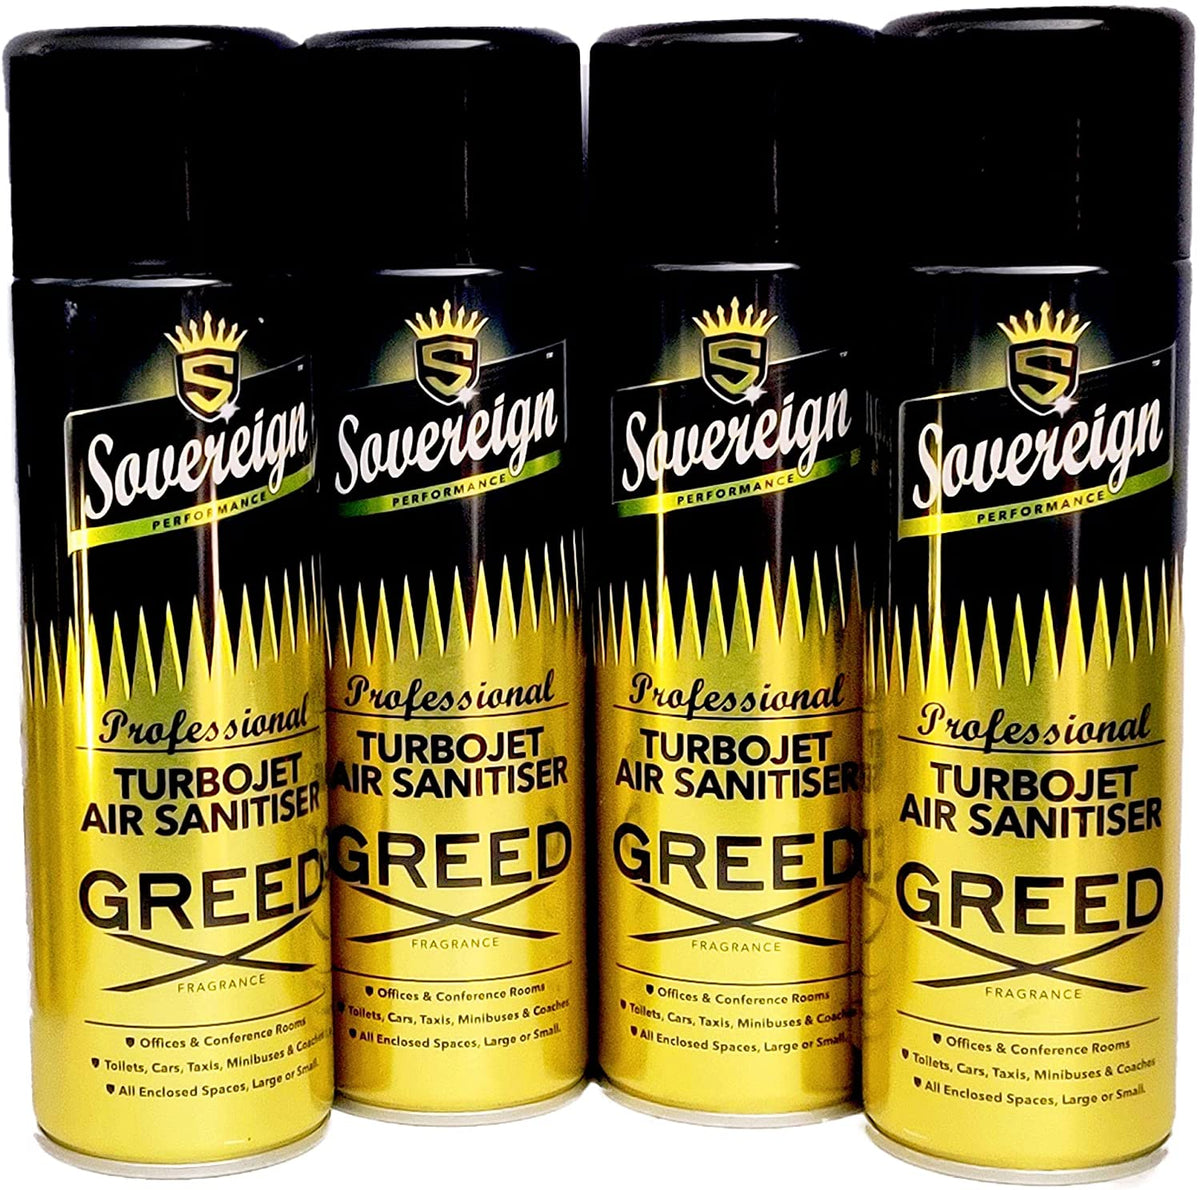 Sovereign - Sovereign Turbojet Air Sanitiser Greed Car Home Spray Freshener - theno1plugshop